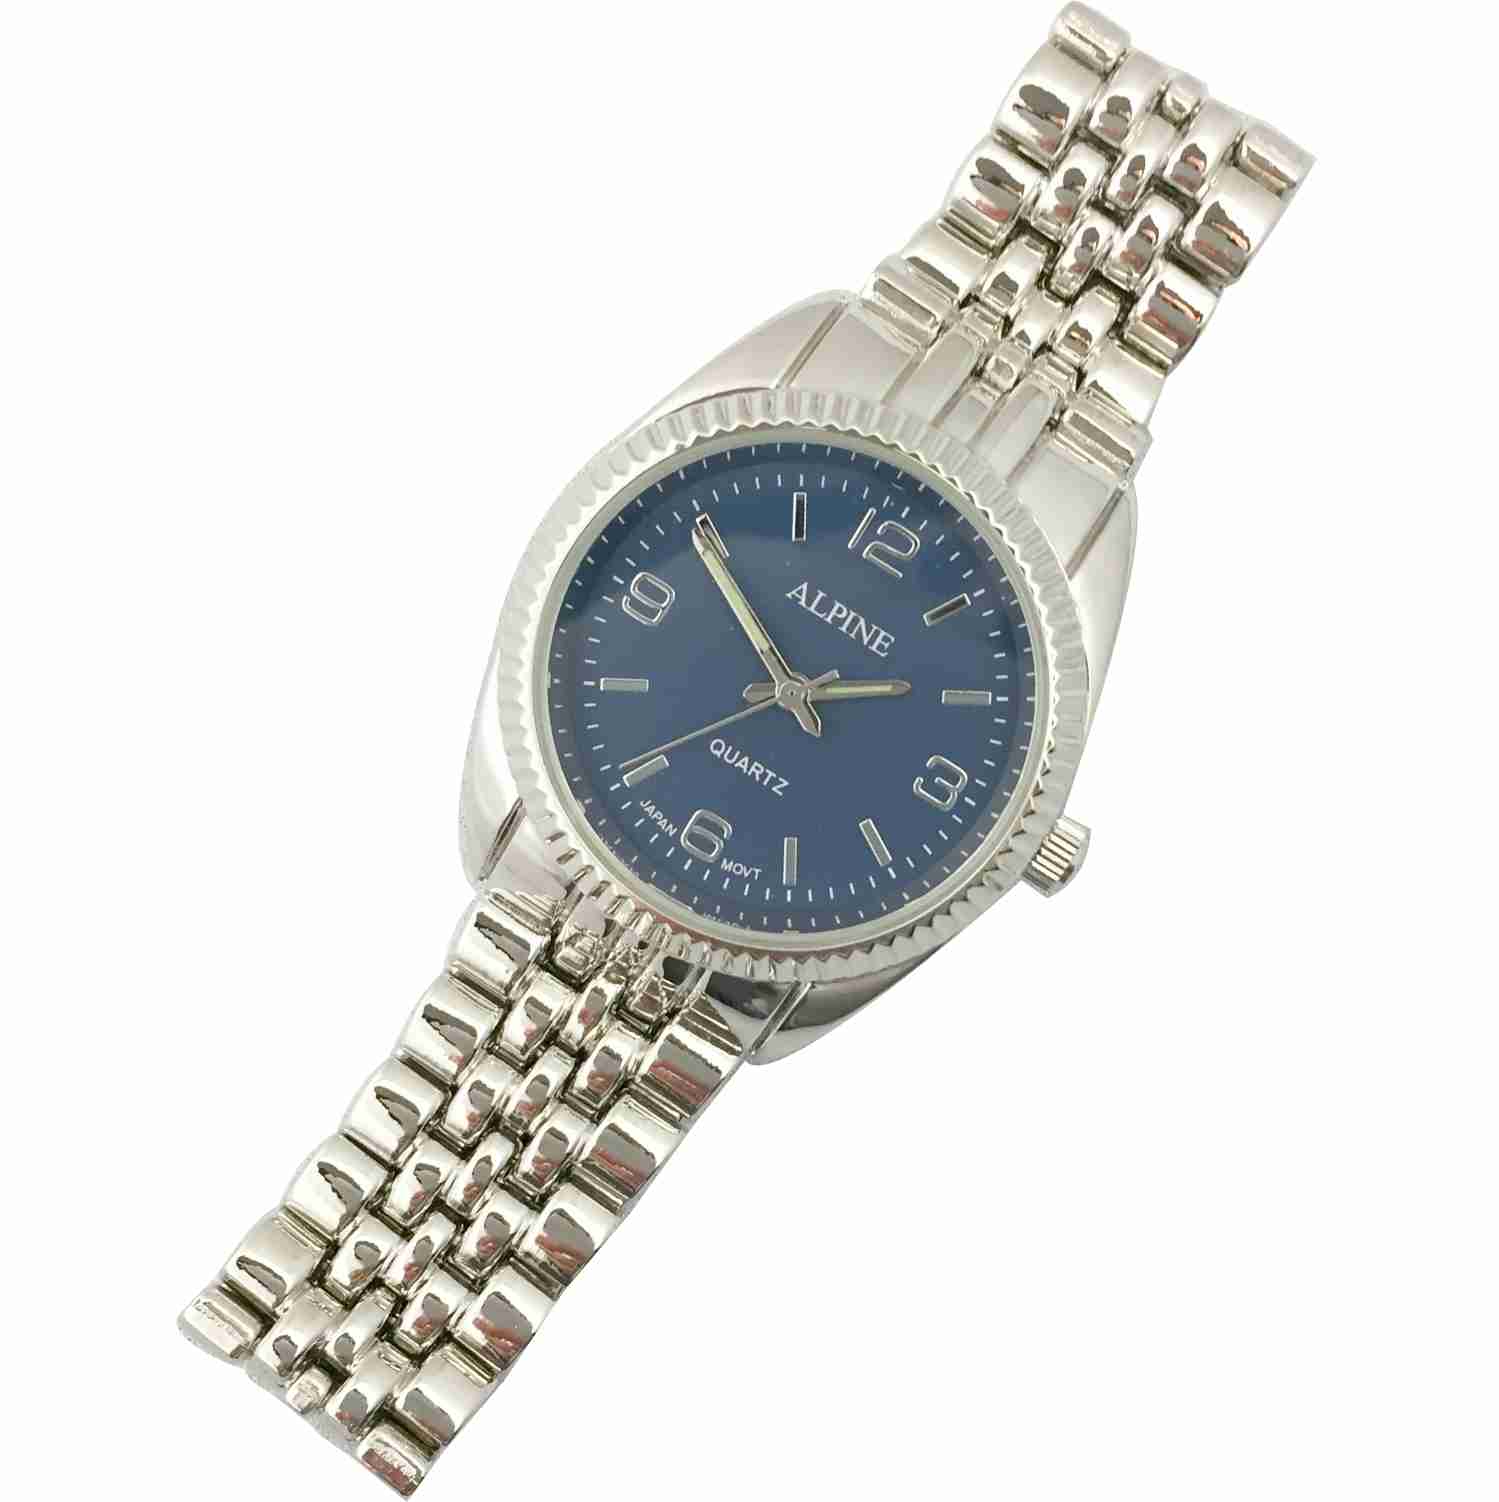 Mens Bracelet Watch - Silver/Blue Dial